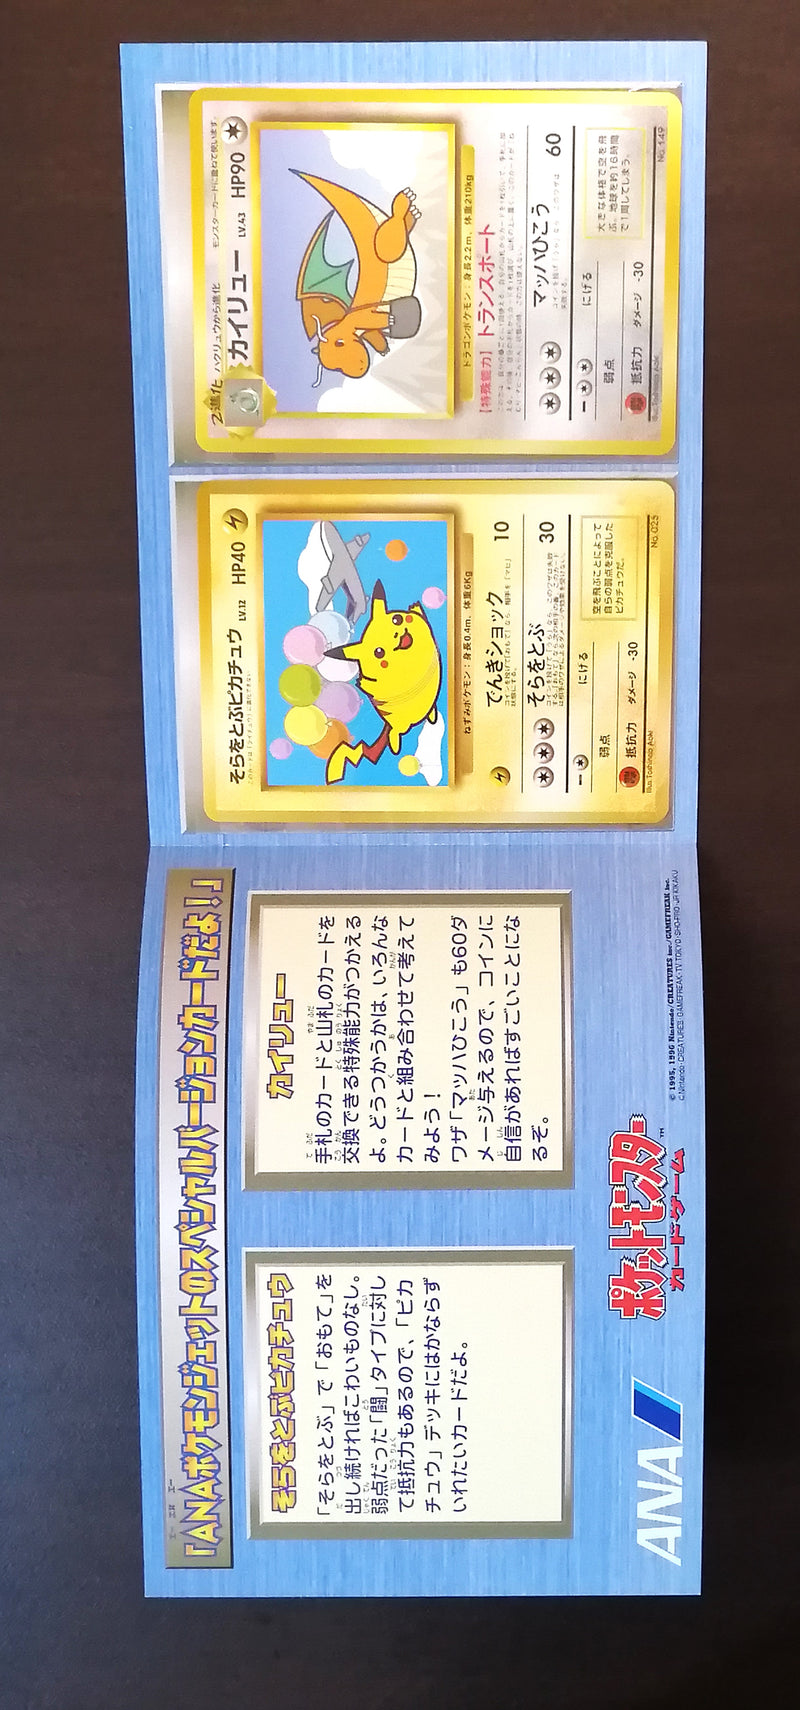 Cartes Pokémon ANA Special Version Pikachu & Dracolosse